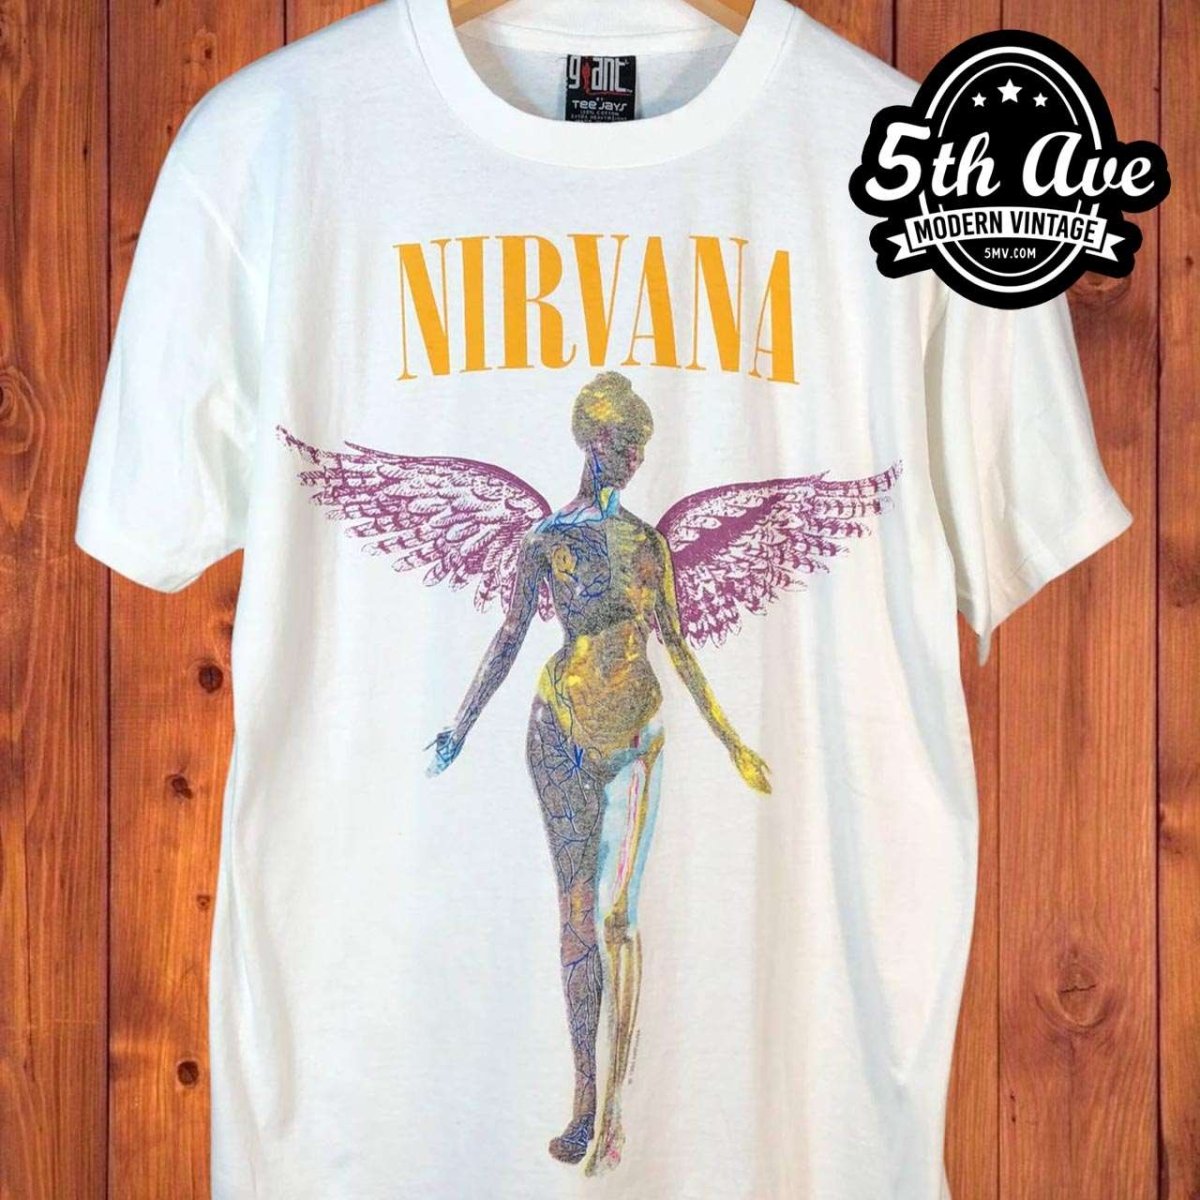 Nirvana In Utero - New Vintage Band T shirt - Vintage Band Shirts